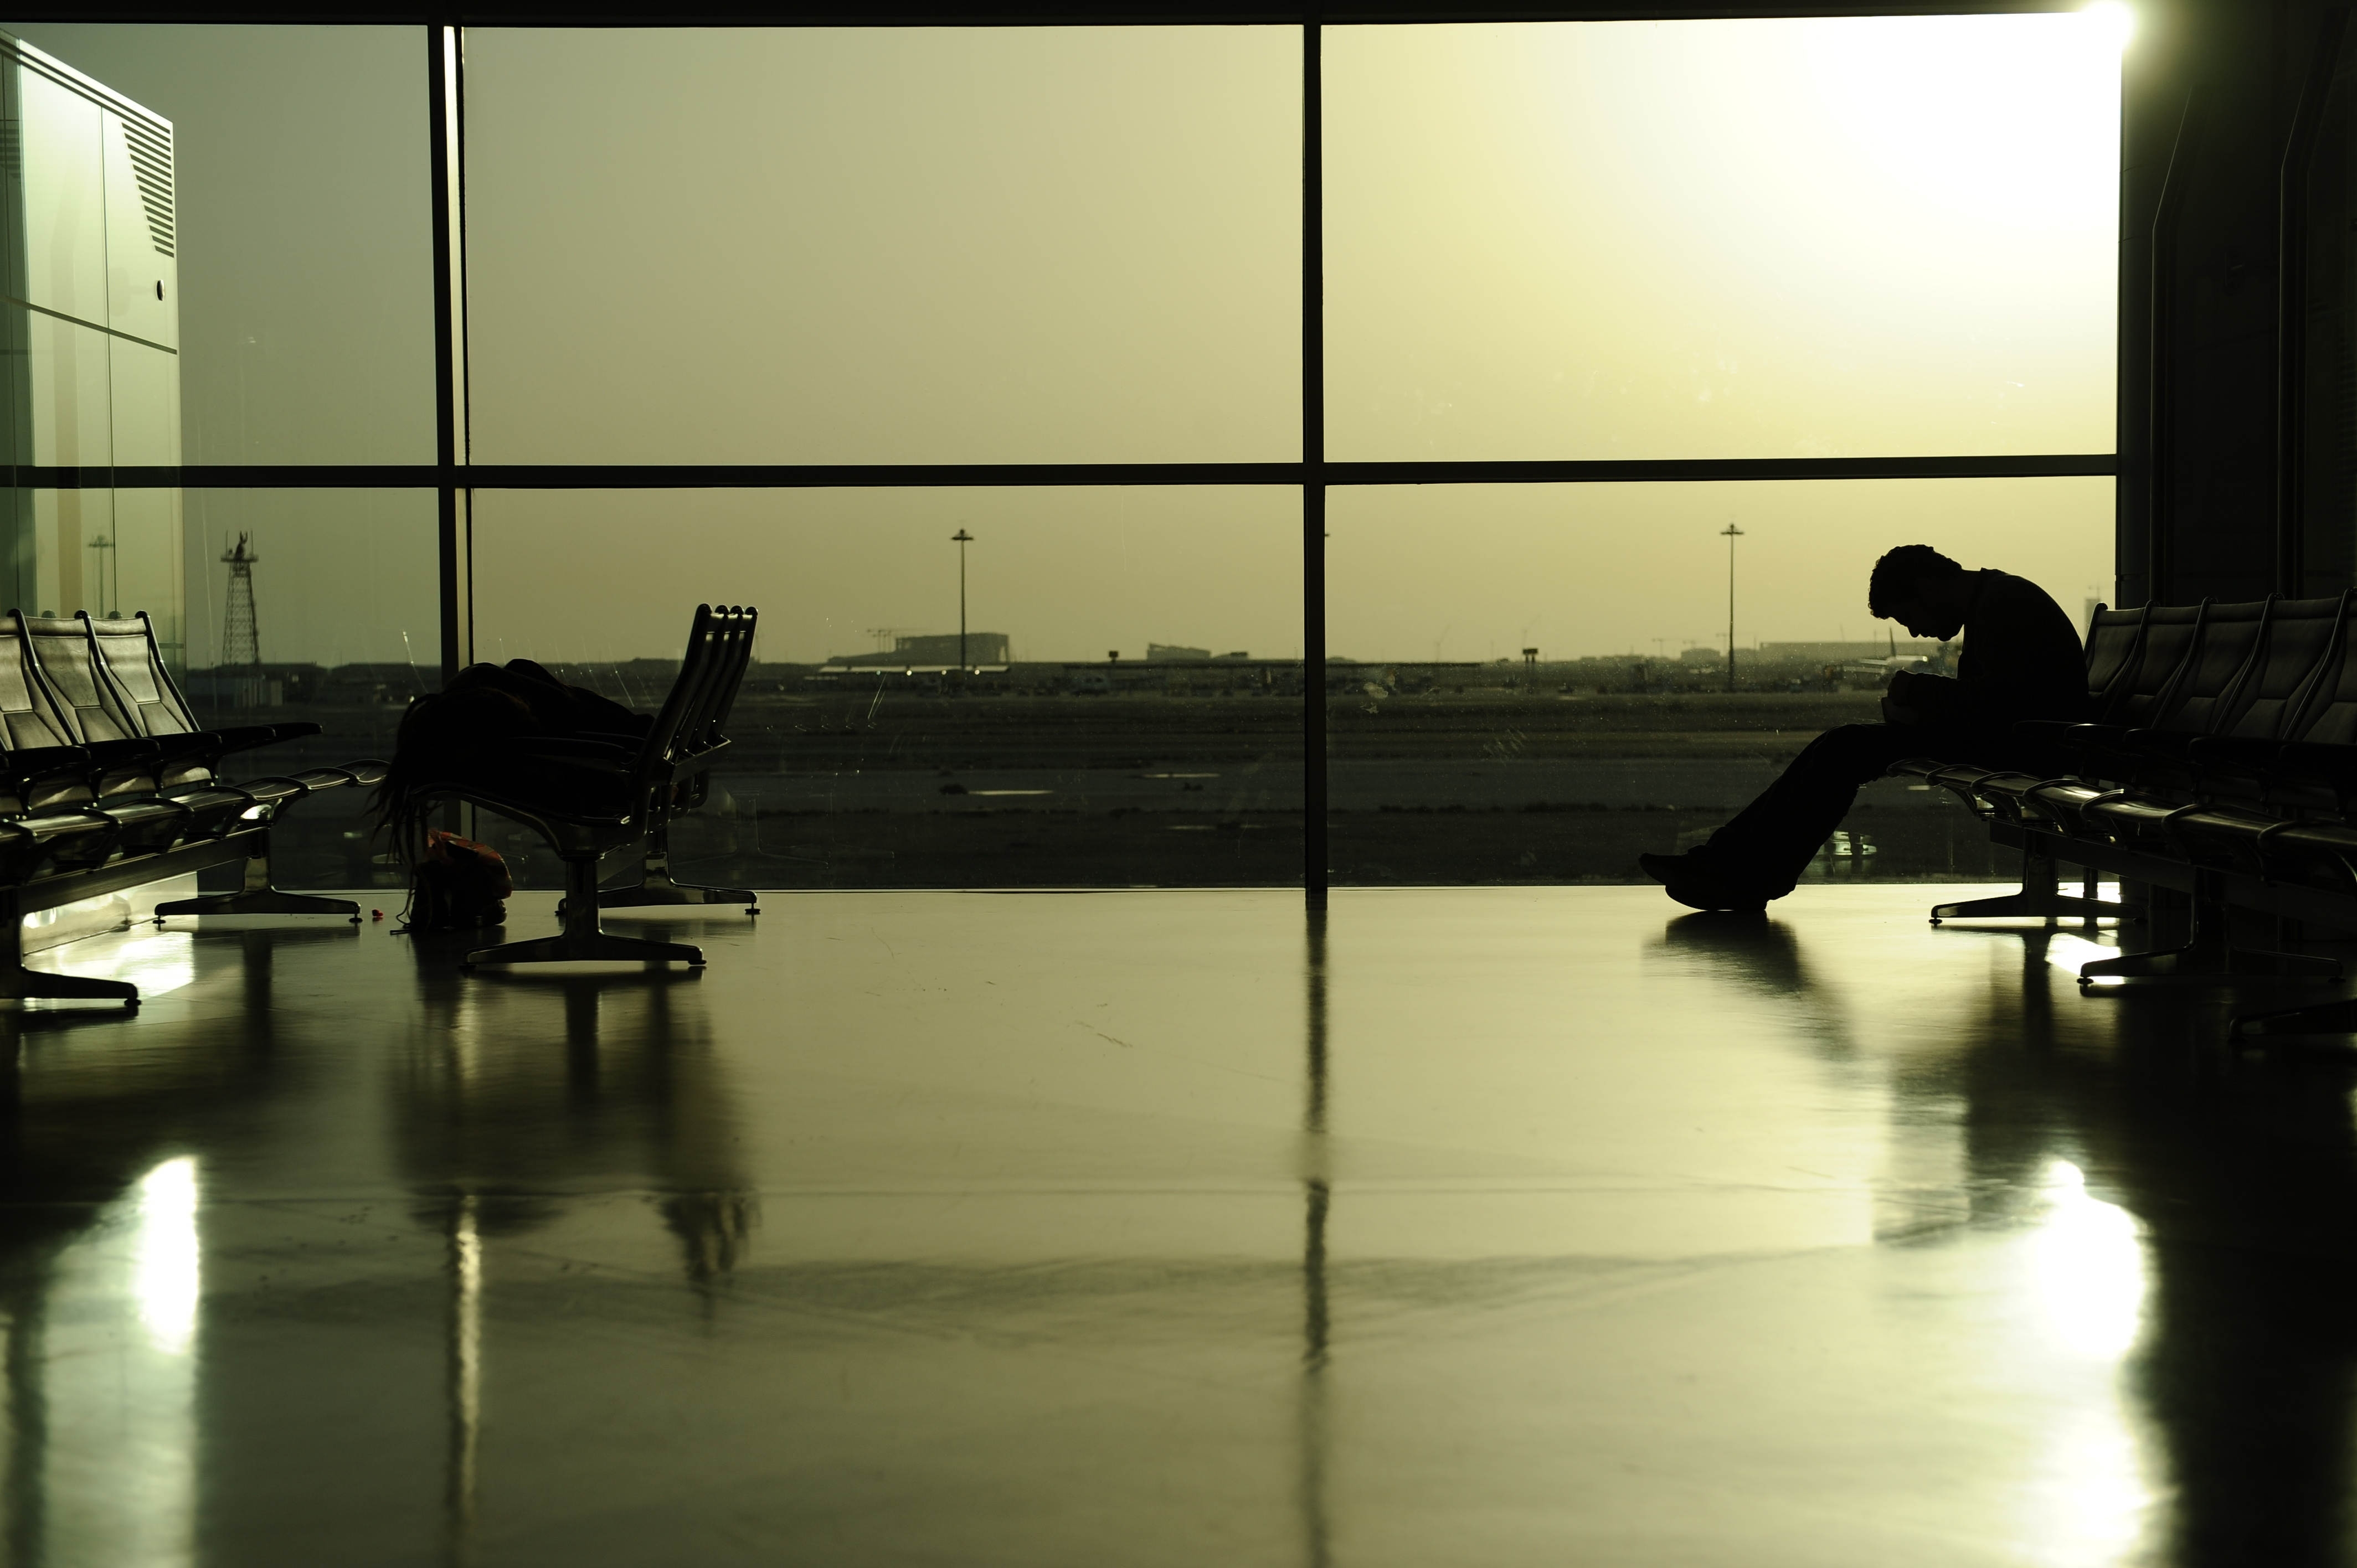 dark, human, person, expectation, waiting, airport